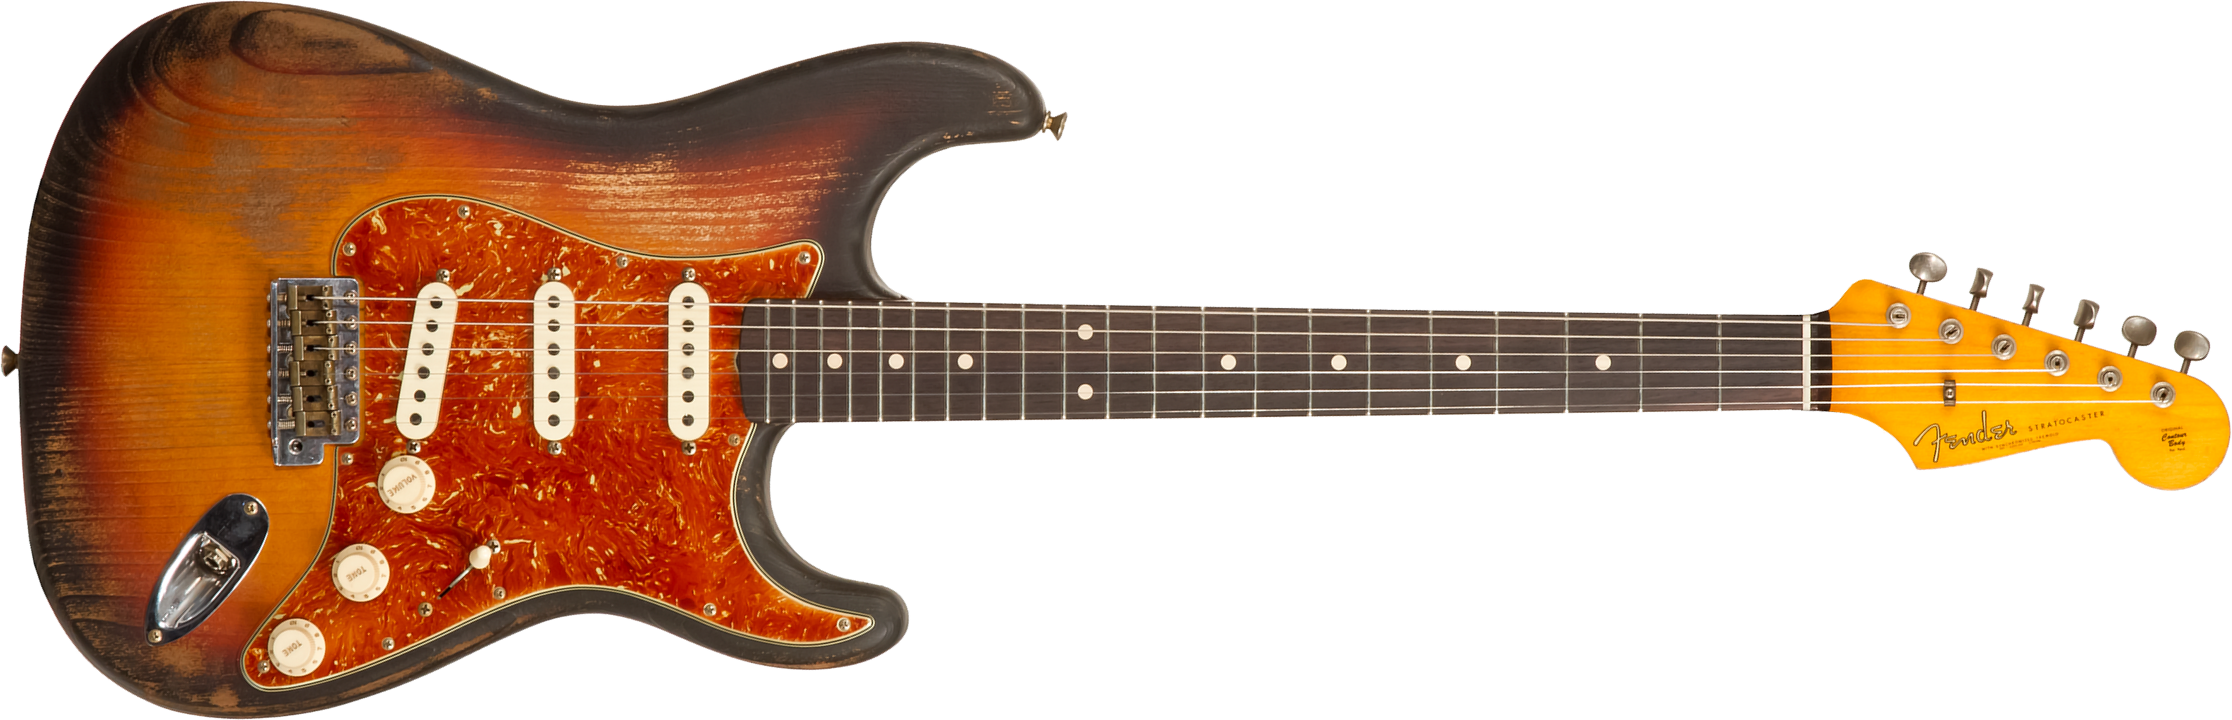 Fender Custom Shop Strat Sandblasted Masterbuilt P.walker #r117542 - Heavy Relic 3-color Sunburst - Guitarra eléctrica con forma de str. - Main pictur